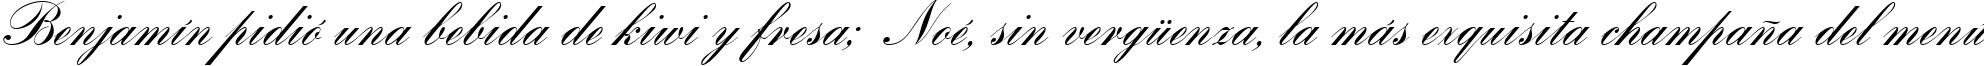 Пример написания шрифтом Romantica script текста на испанском